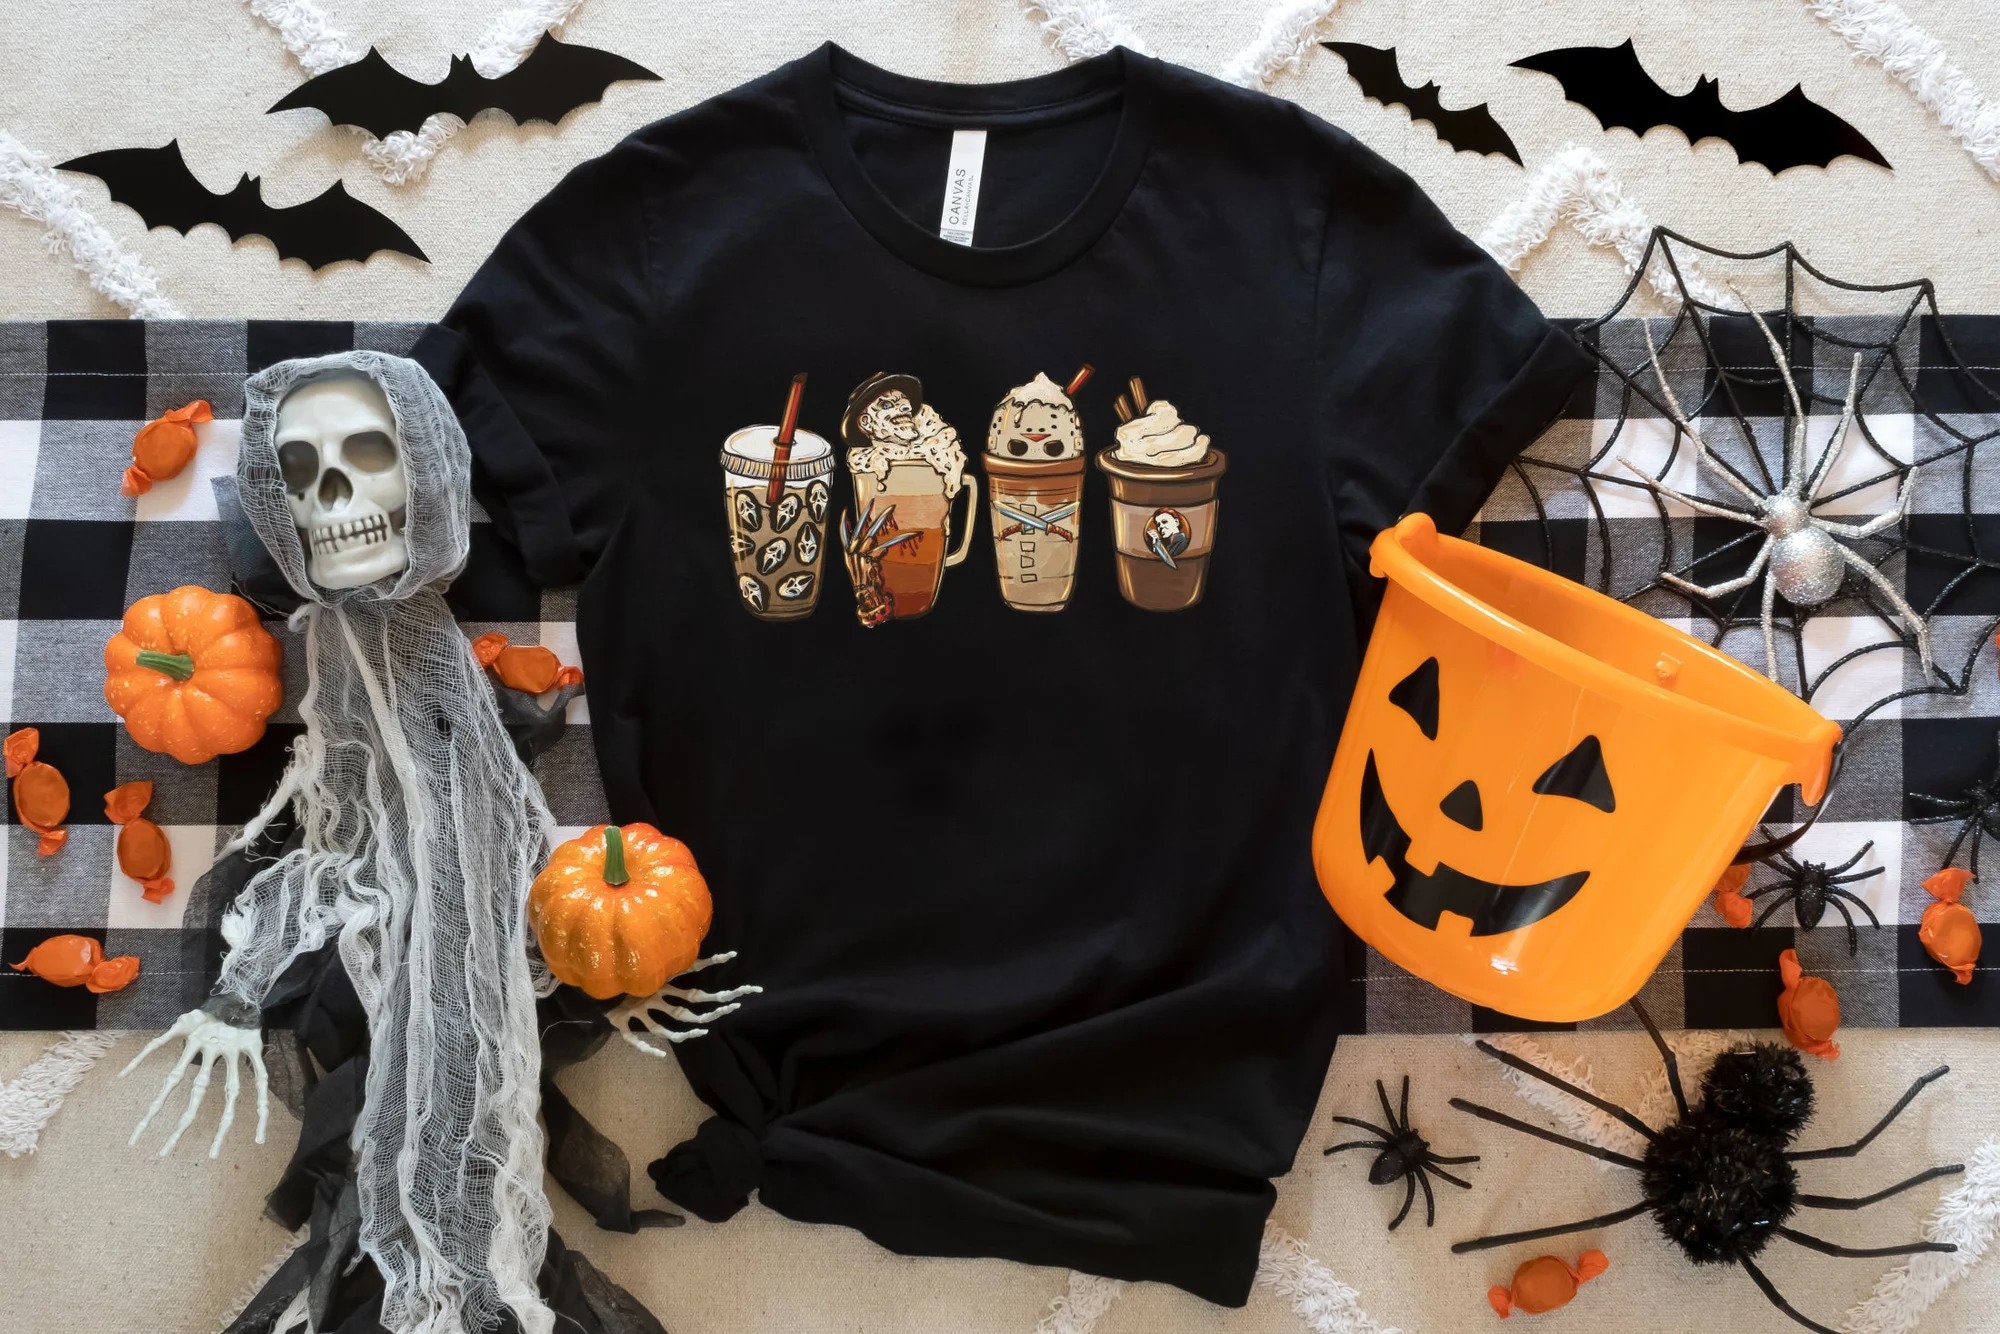 Discover Halloween Horror Coffee Sweatshirt, Horror Movie Coffee Shirt,Halloween Sweatshirt, Spooky Season, Coffee Shirt, Halloween Graphic Shirt